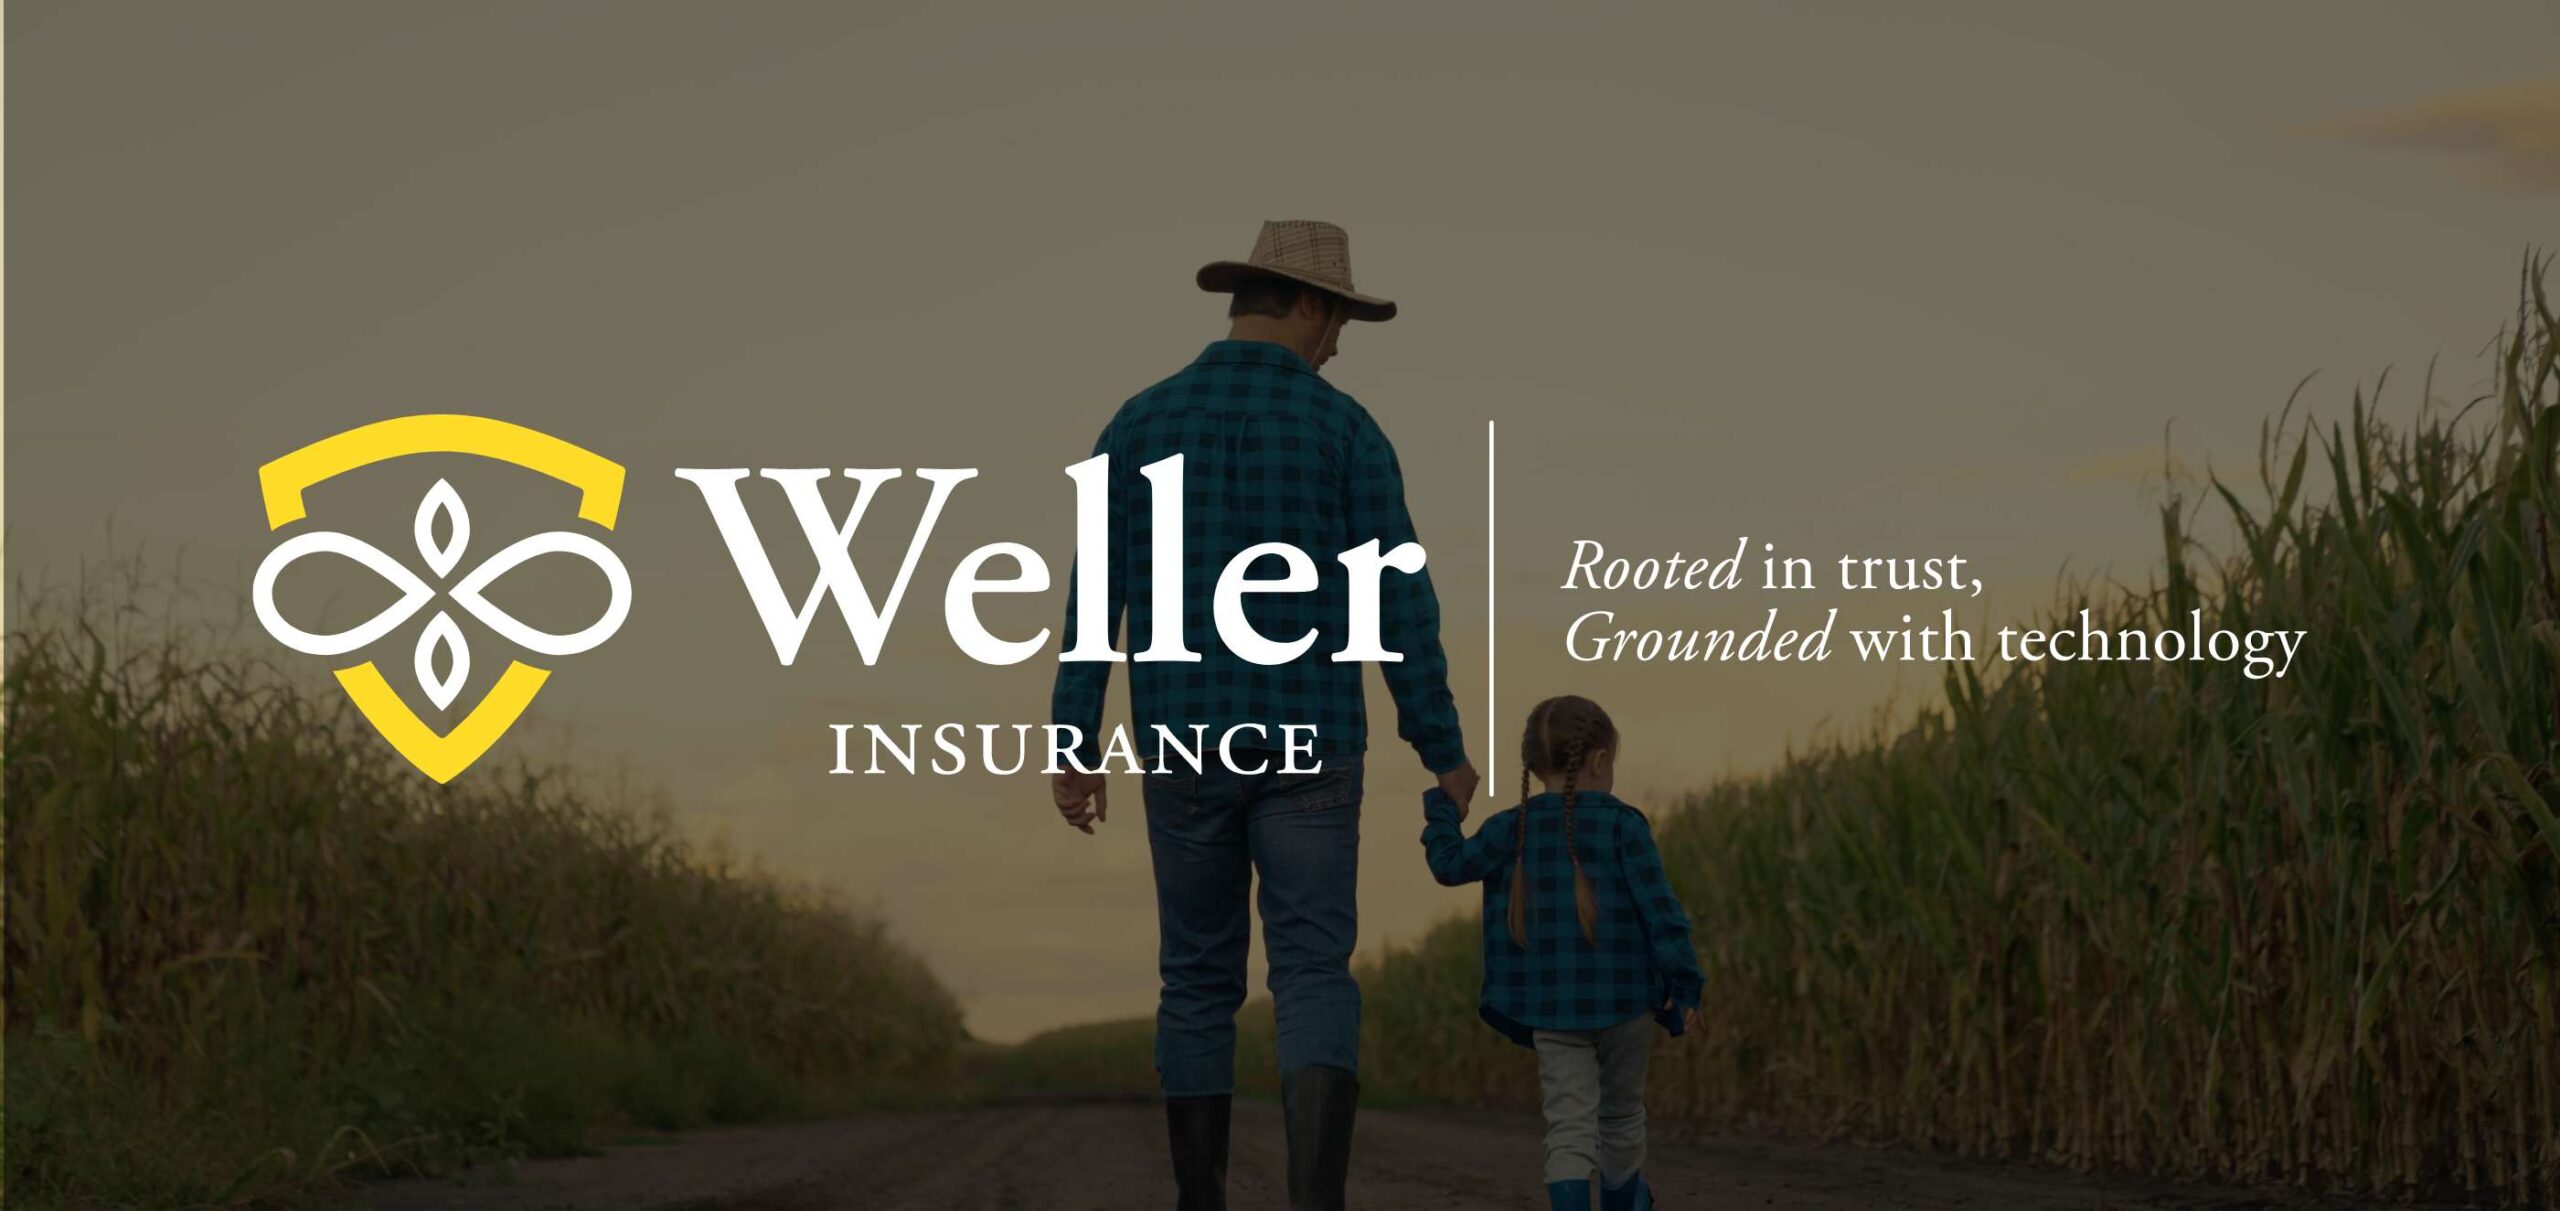 Weller Insurance Logo Designs